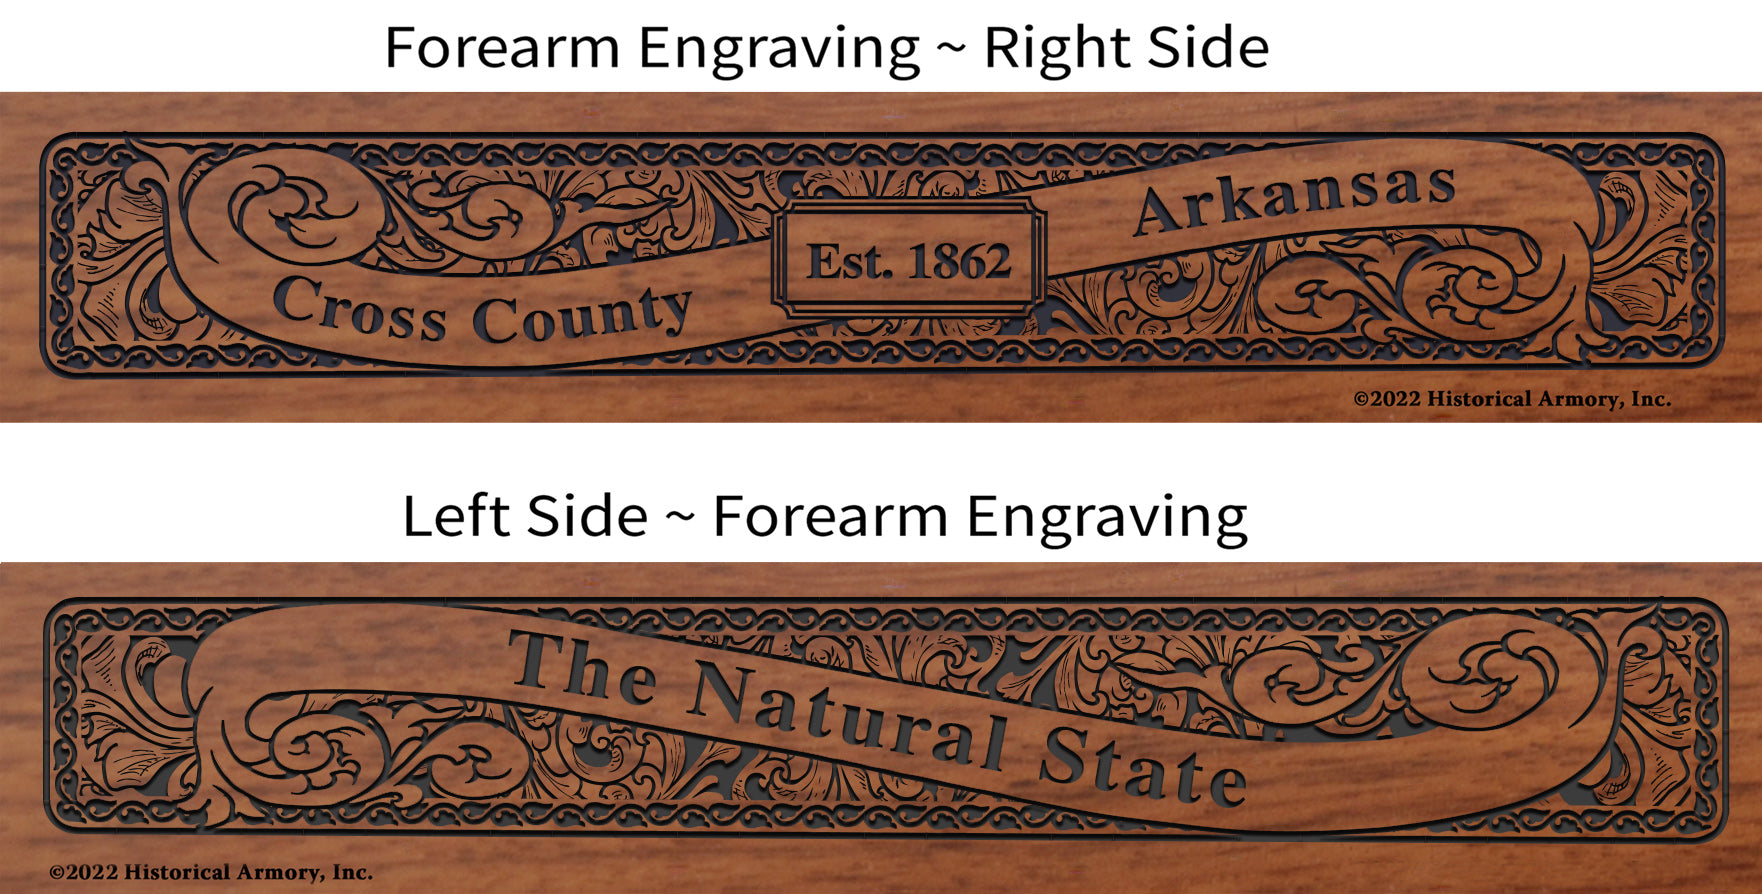 Cross County Arkansas Engraved Rifle Forearm